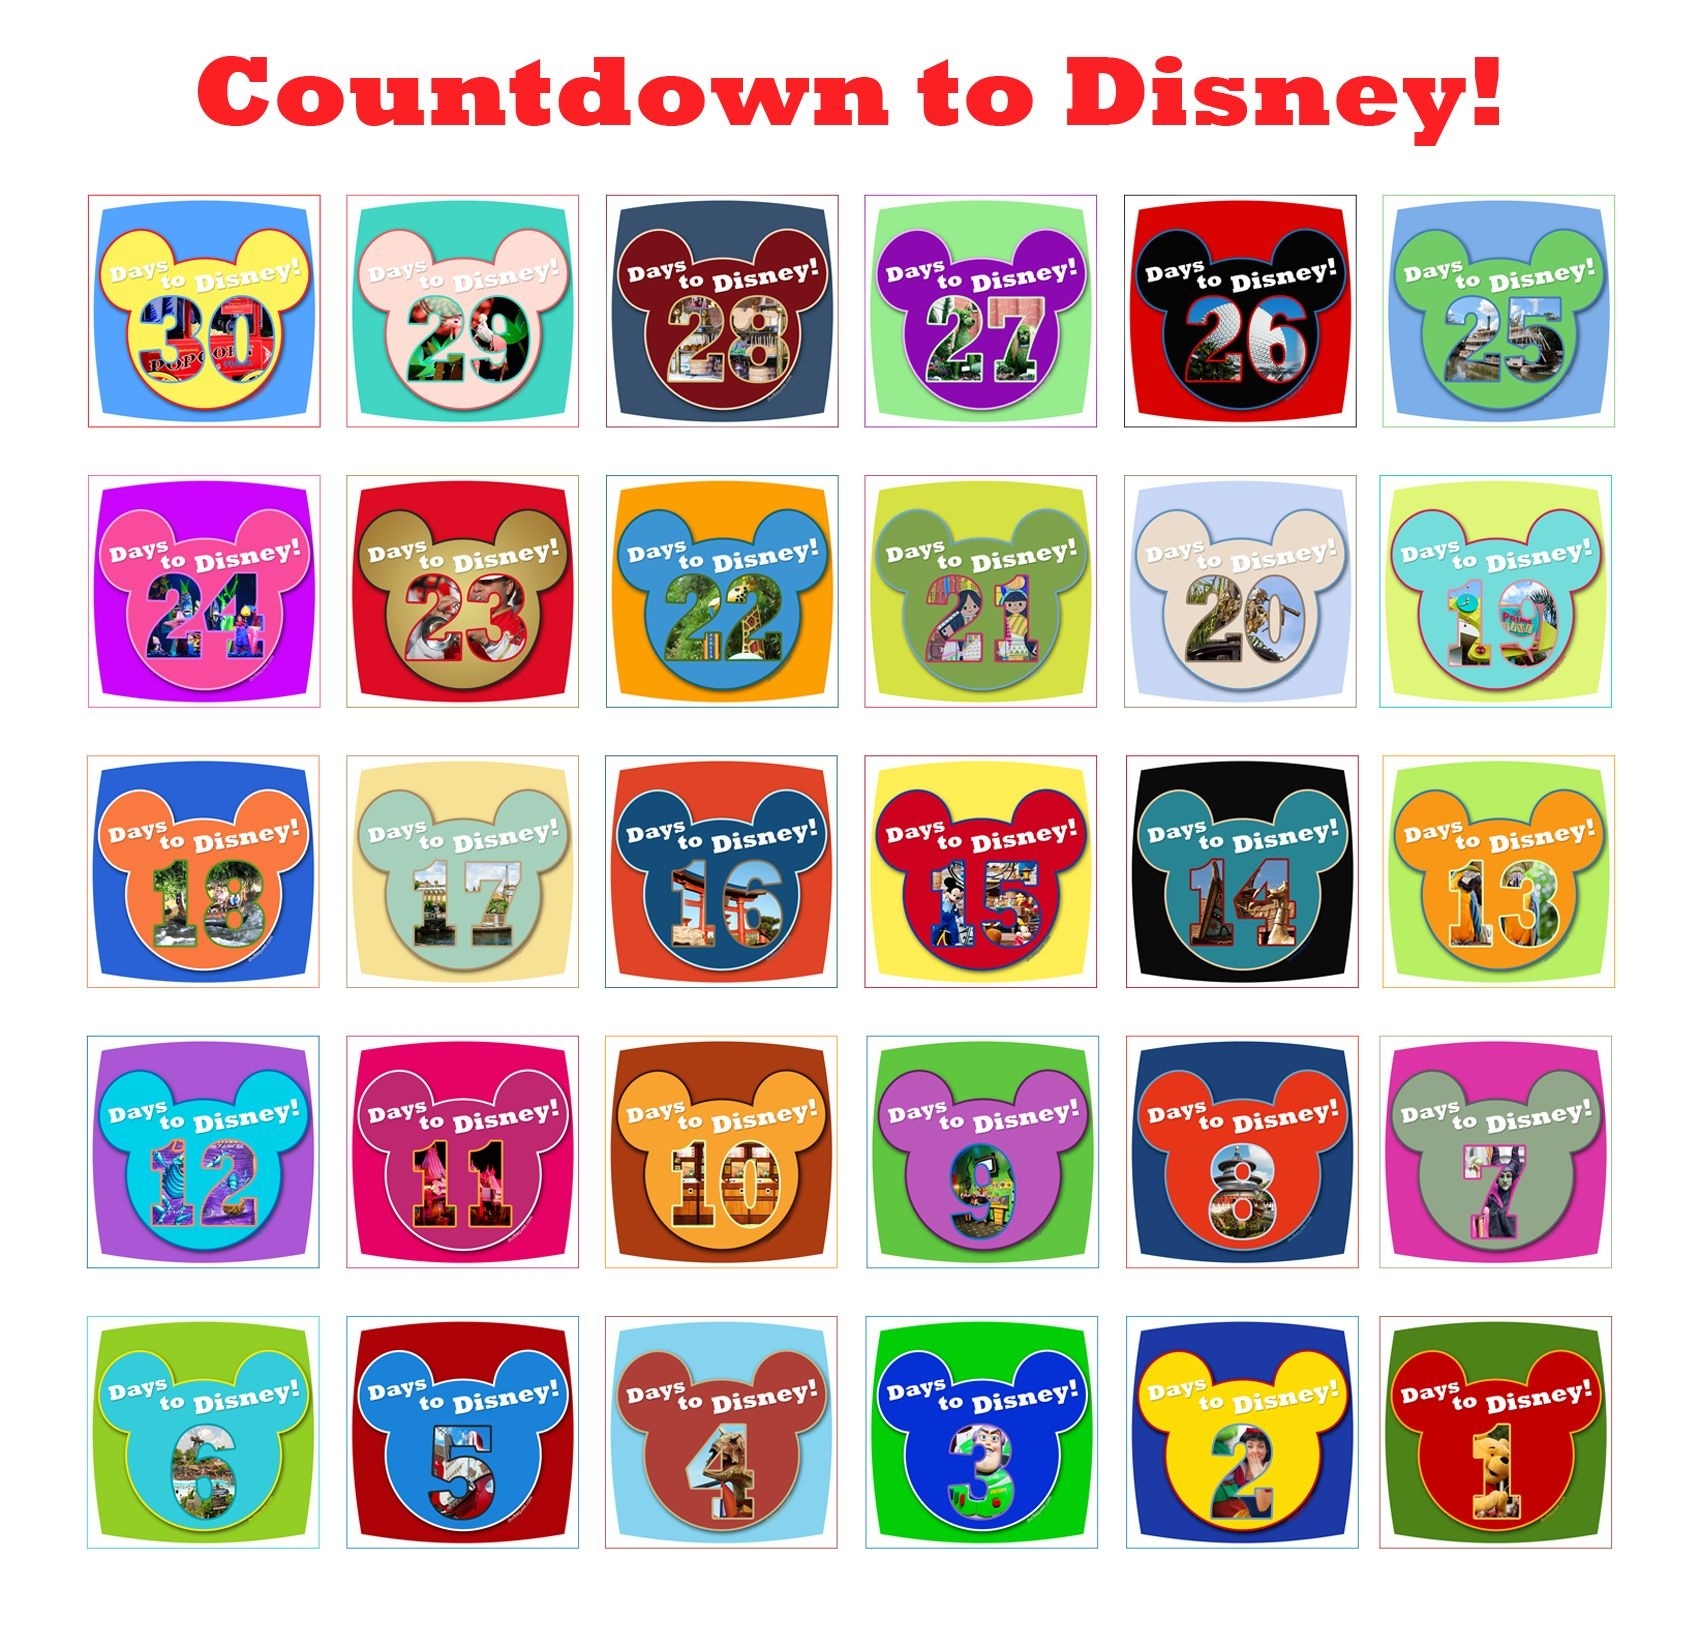 Countdown Calendar Grid - The Official Blog Of David's Perky Disney Vacation Club Countdown Calendar